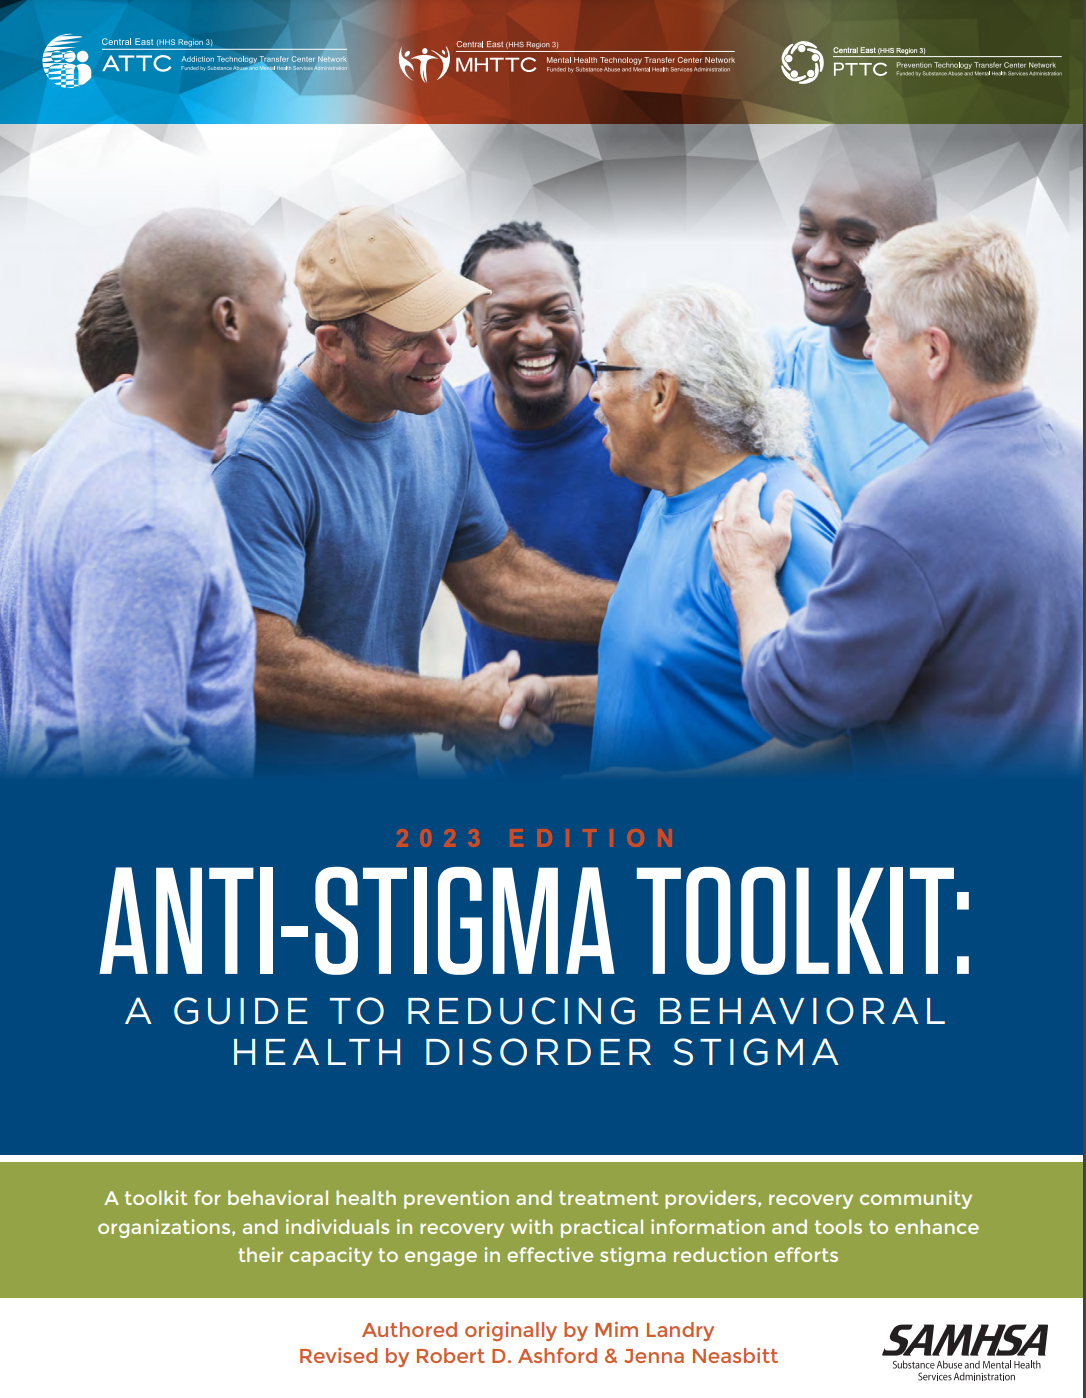 Anti-Stigma Toolkit:
A Guide to Reducing Behavioral Health Disorders Stigma screenshot